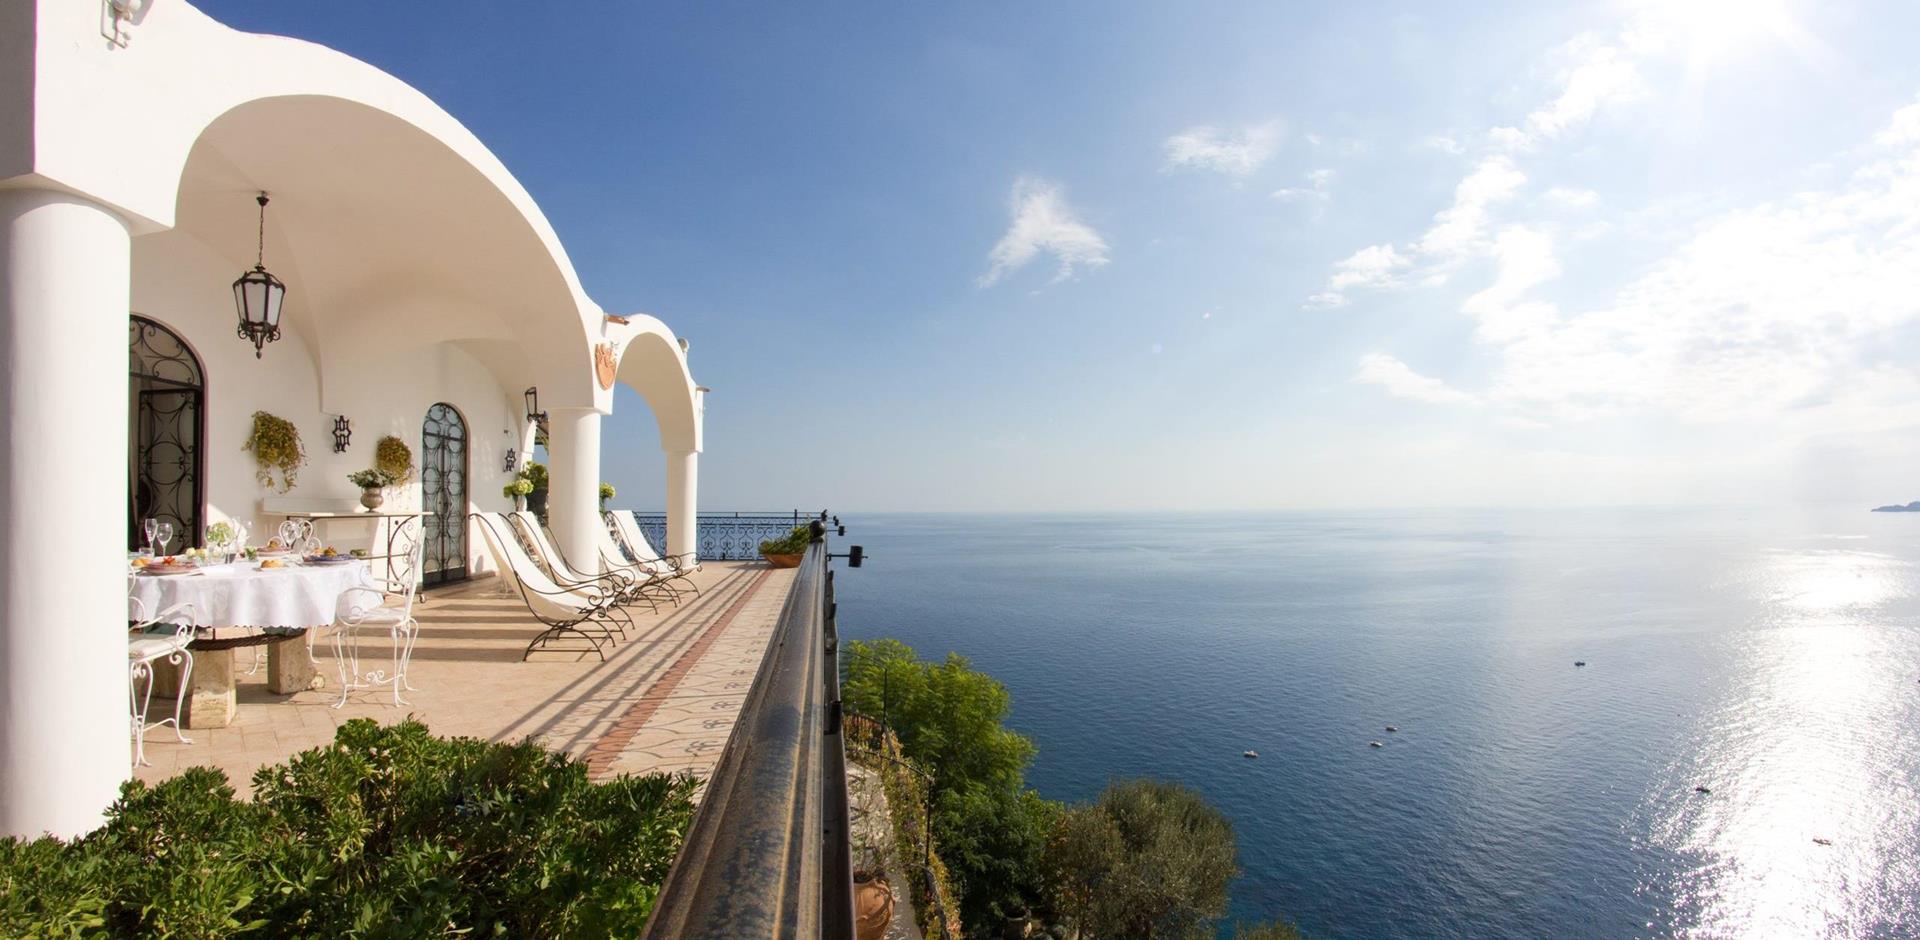 Terrace Seating Area With Sea View, Villa Grande, Amalfi Coast